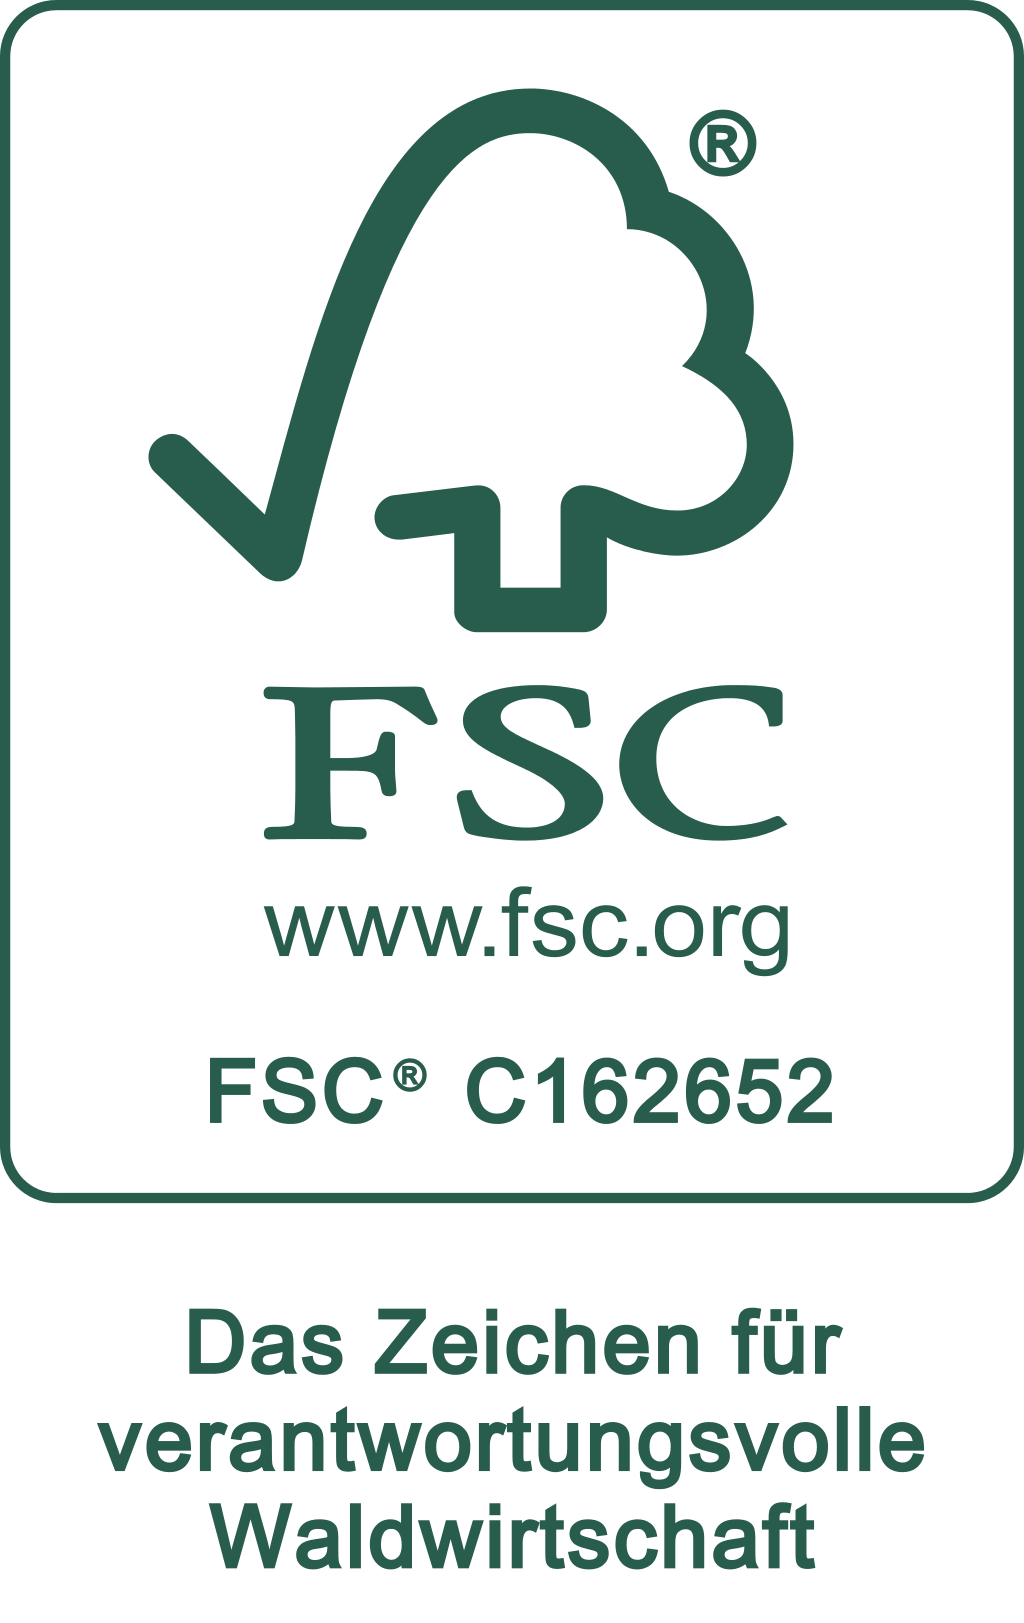 FSC® C162652